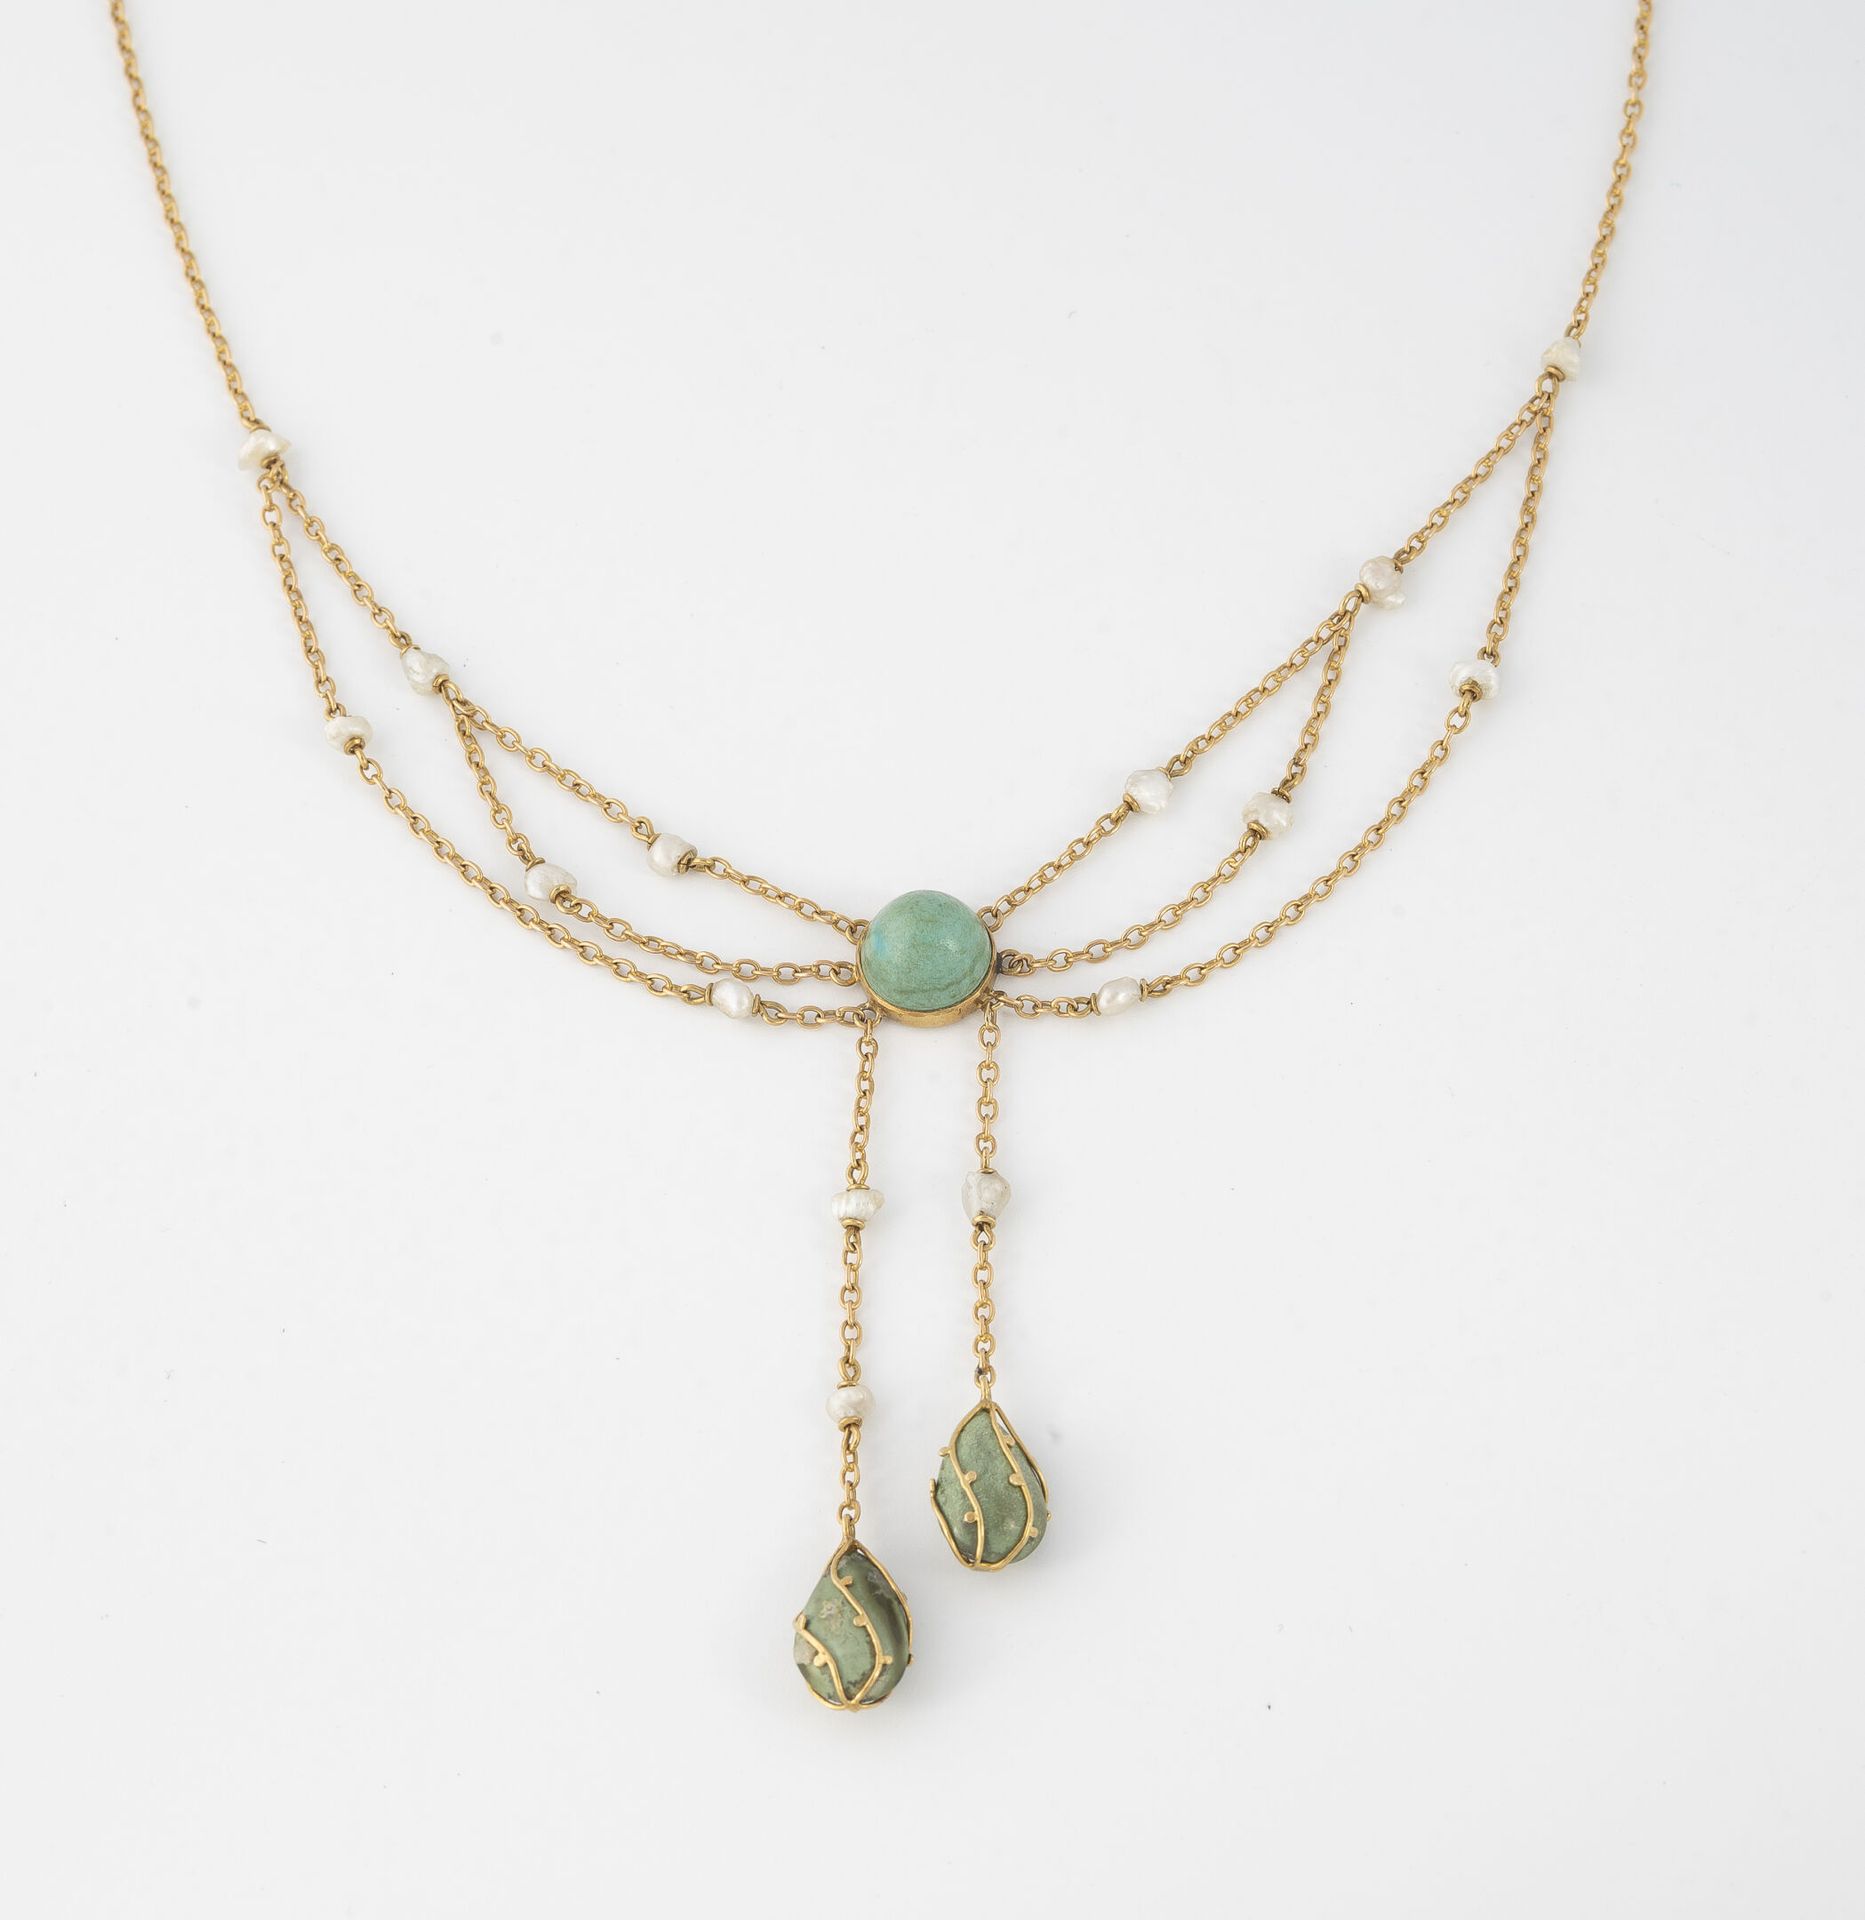 Null 精致的黄金（750）forçat链条项链，领口形成一个垂线，用巴洛克珍珠点缀，并装饰有三个凸圆形或滴状的绿色绿松石。

弹簧环扣。

毛重：8.5克。&hellip;